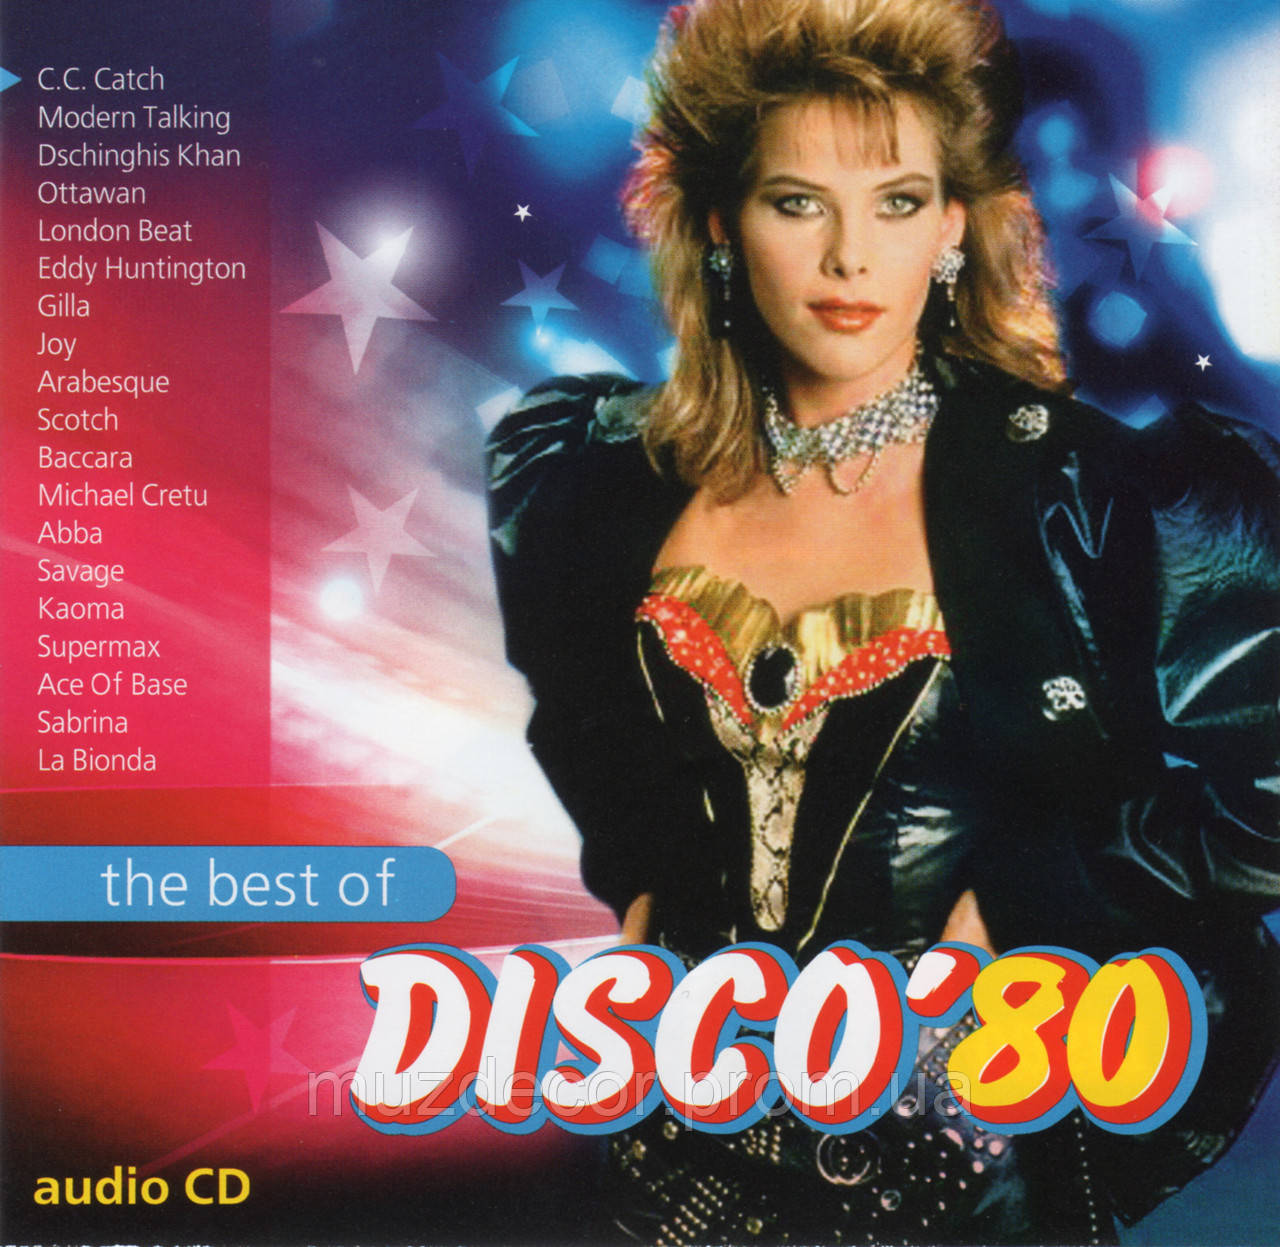 THE BEST OF DISCO 80 AUDIO CD